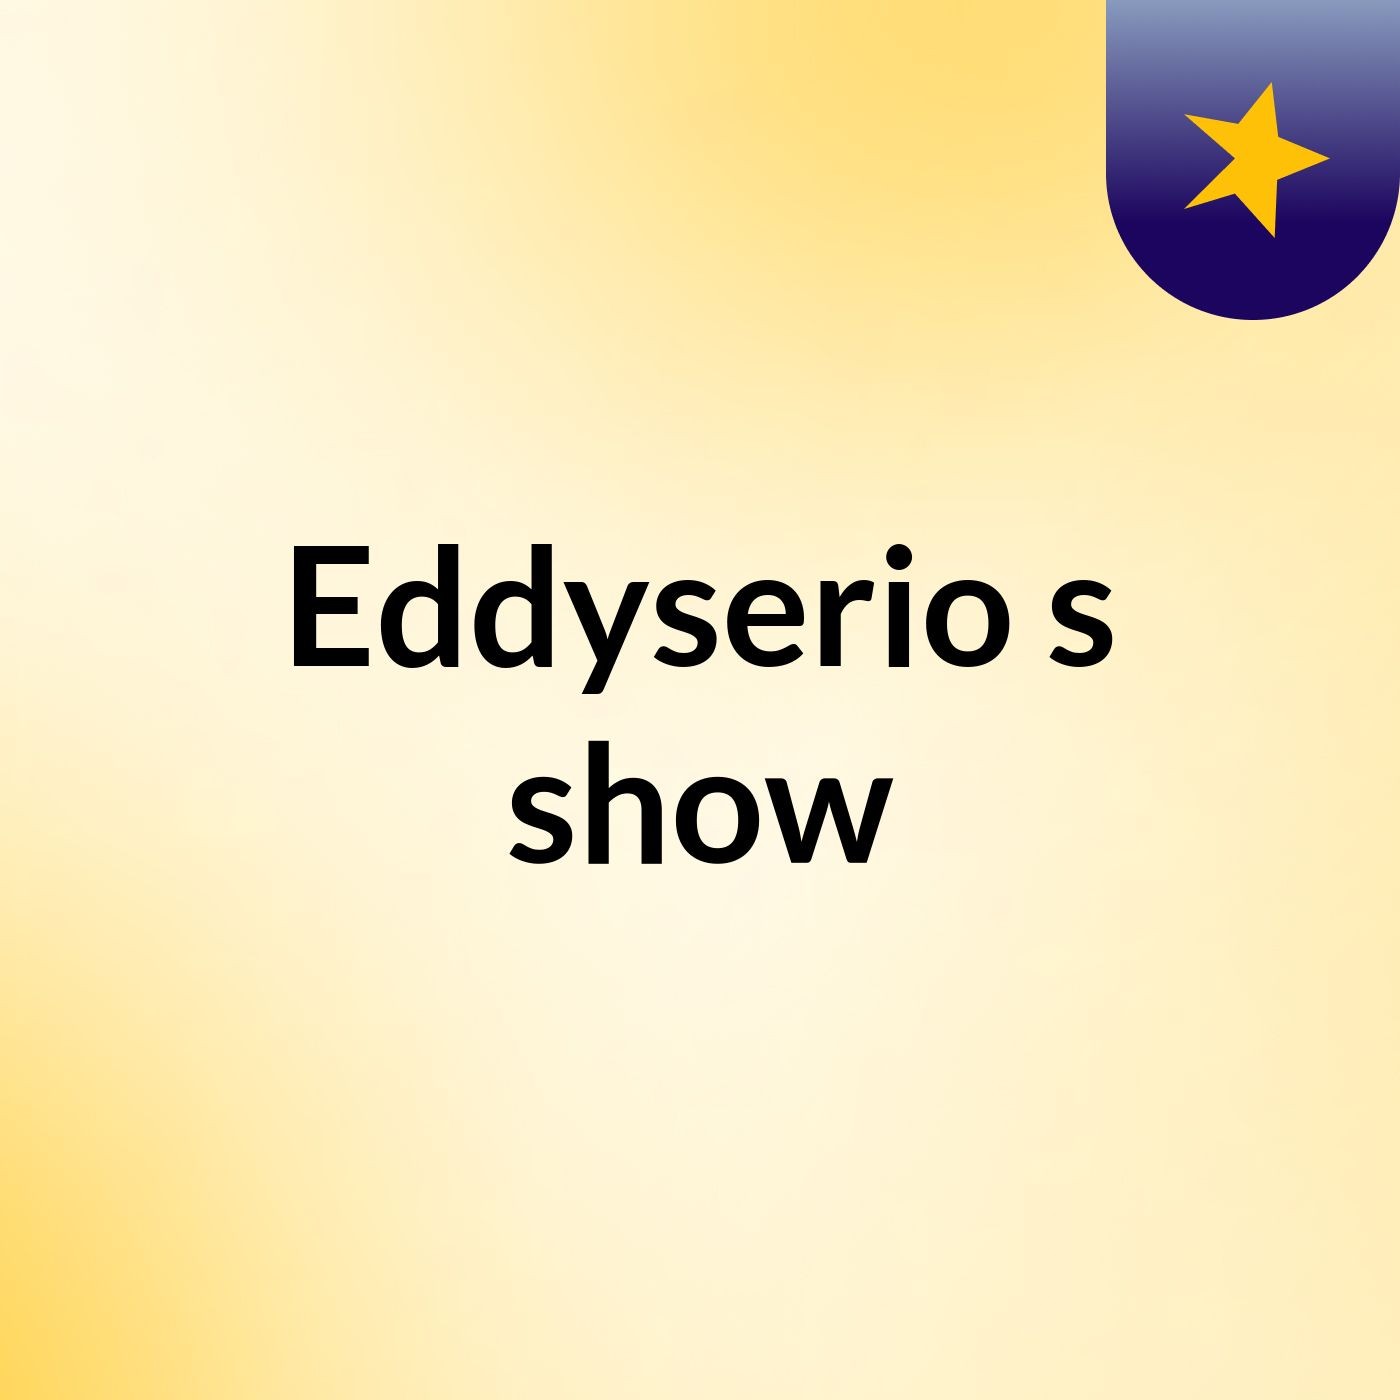 Eddyserio's show